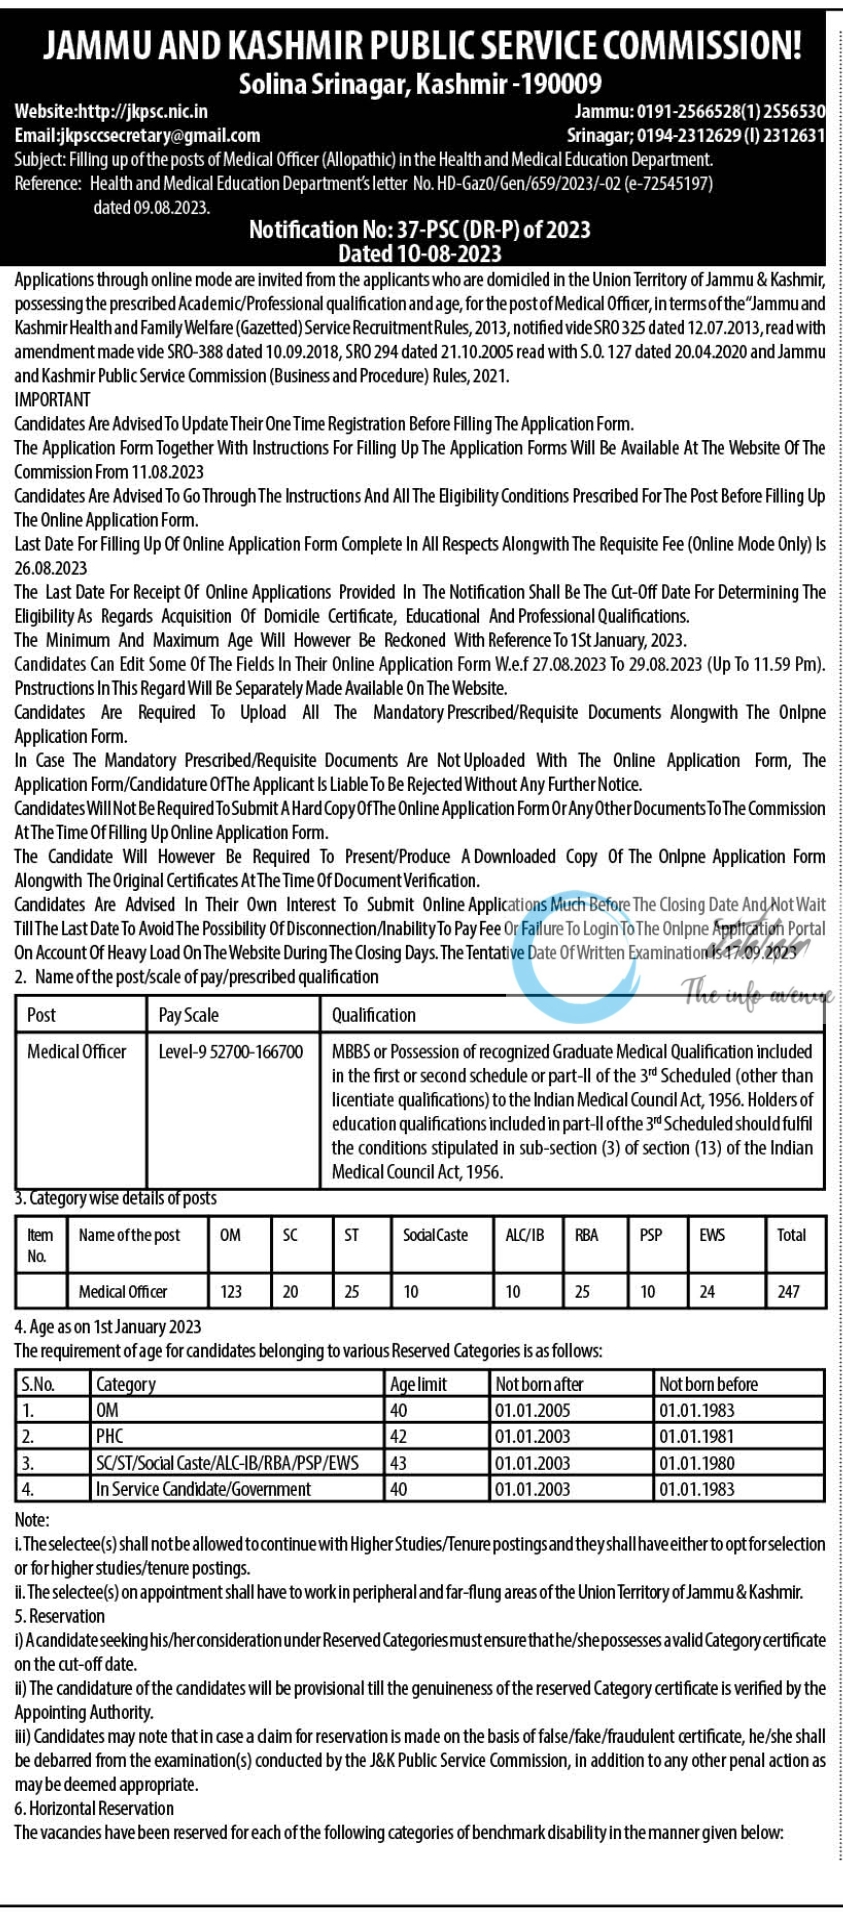 JKPSC Medical Officer Recruitment Notification No 37 of 2023